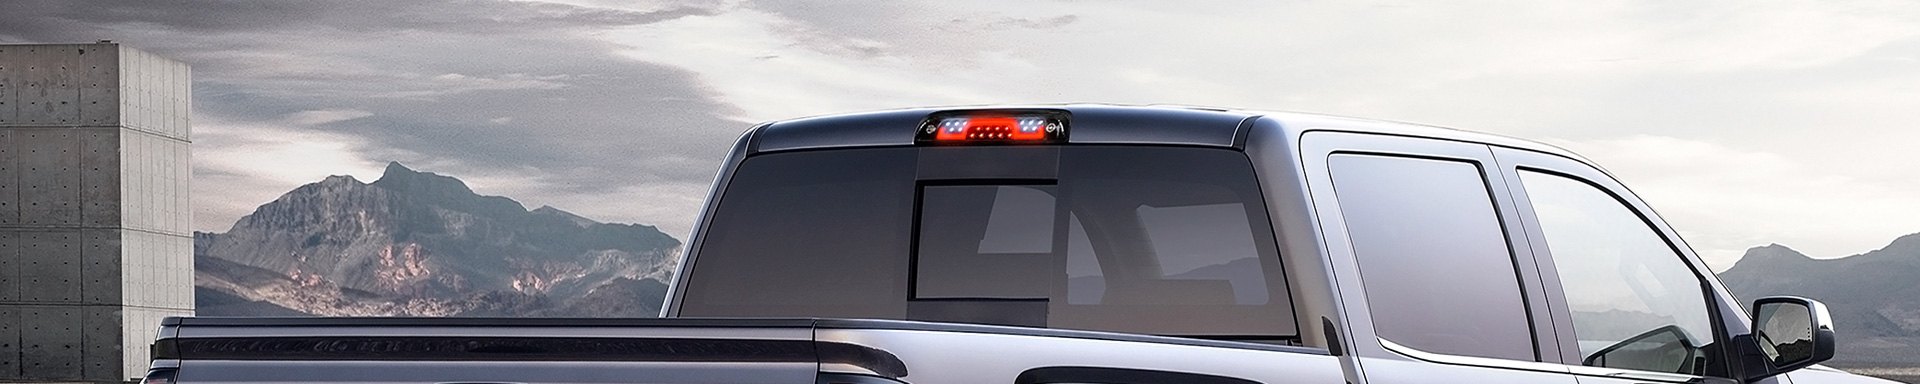 Introducing New Lumen Sequential Fiber Optic LED 3rd Brake Light for Chevy Trucks